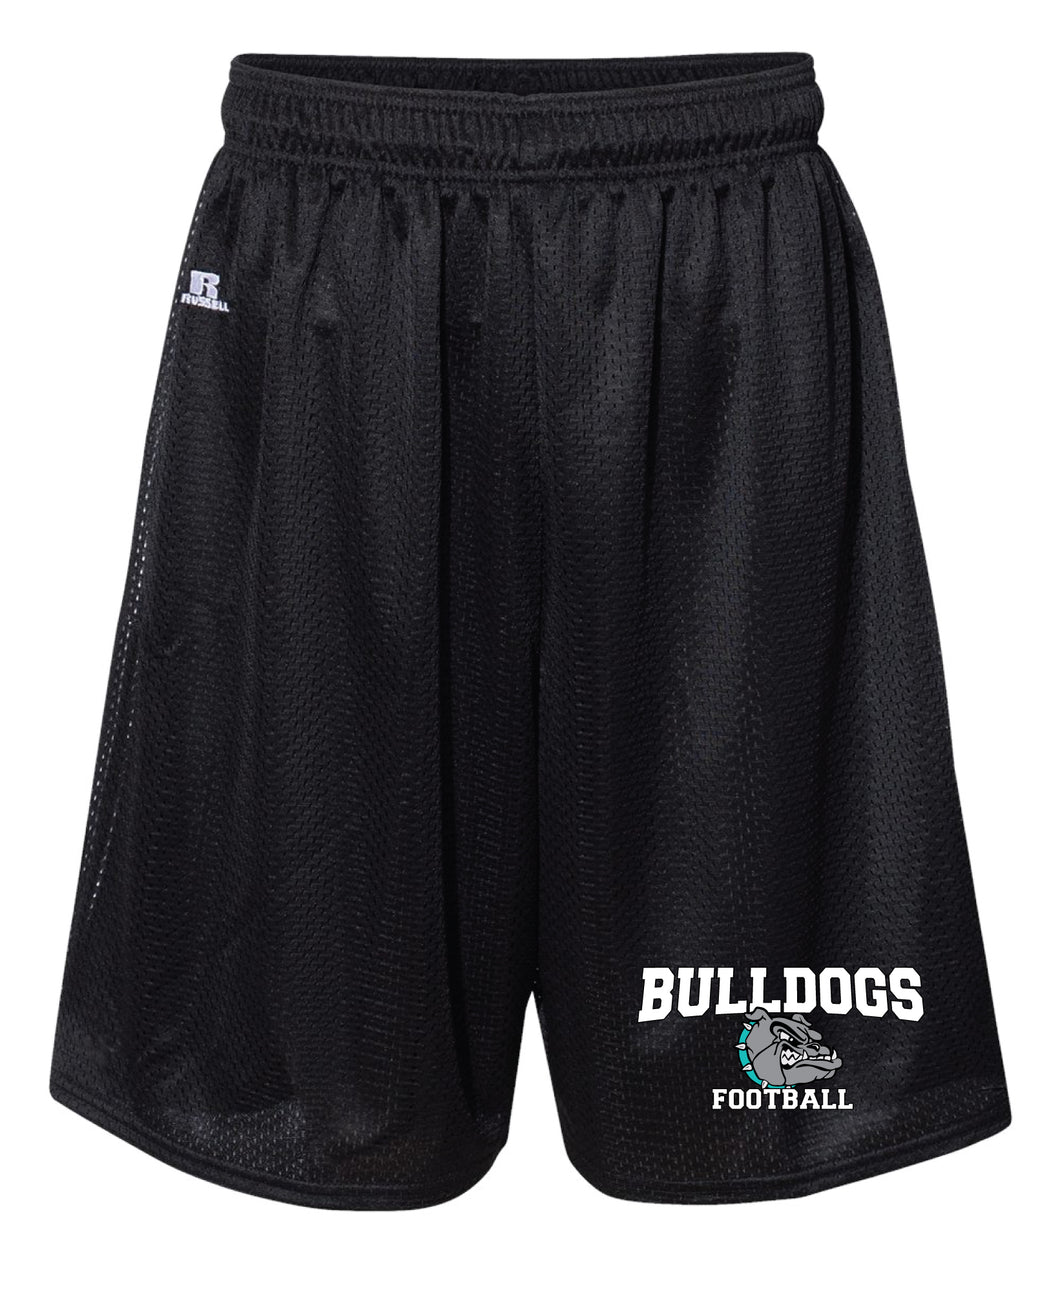 Moyock Bulldogs Football Russell Athletic Tech Shorts - Black - 5KounT2018